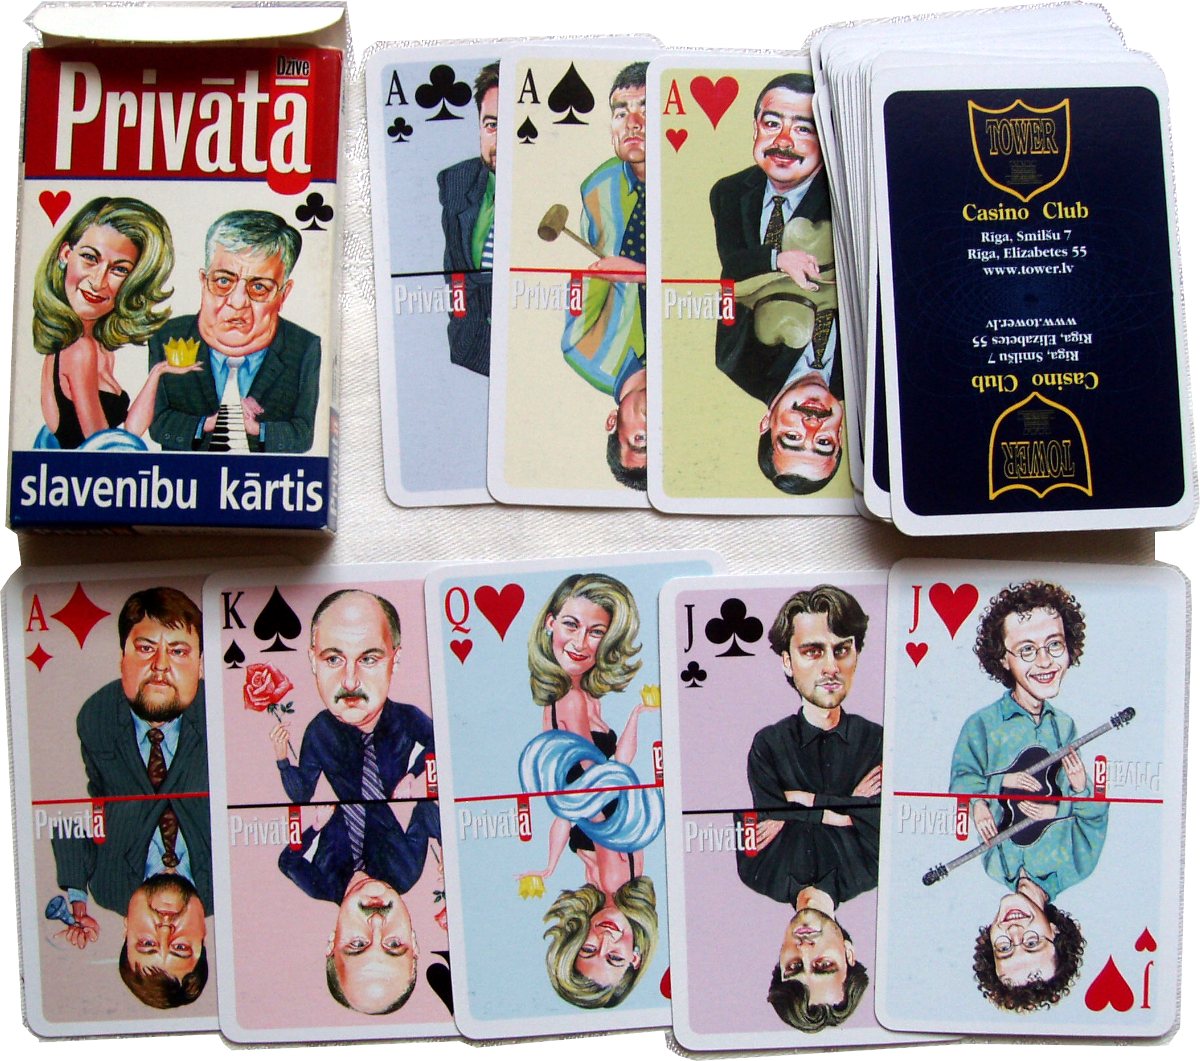 Latvian Playing Cards published by Privātā Magazine, designed by artist Ludmila Bulikina, 2001